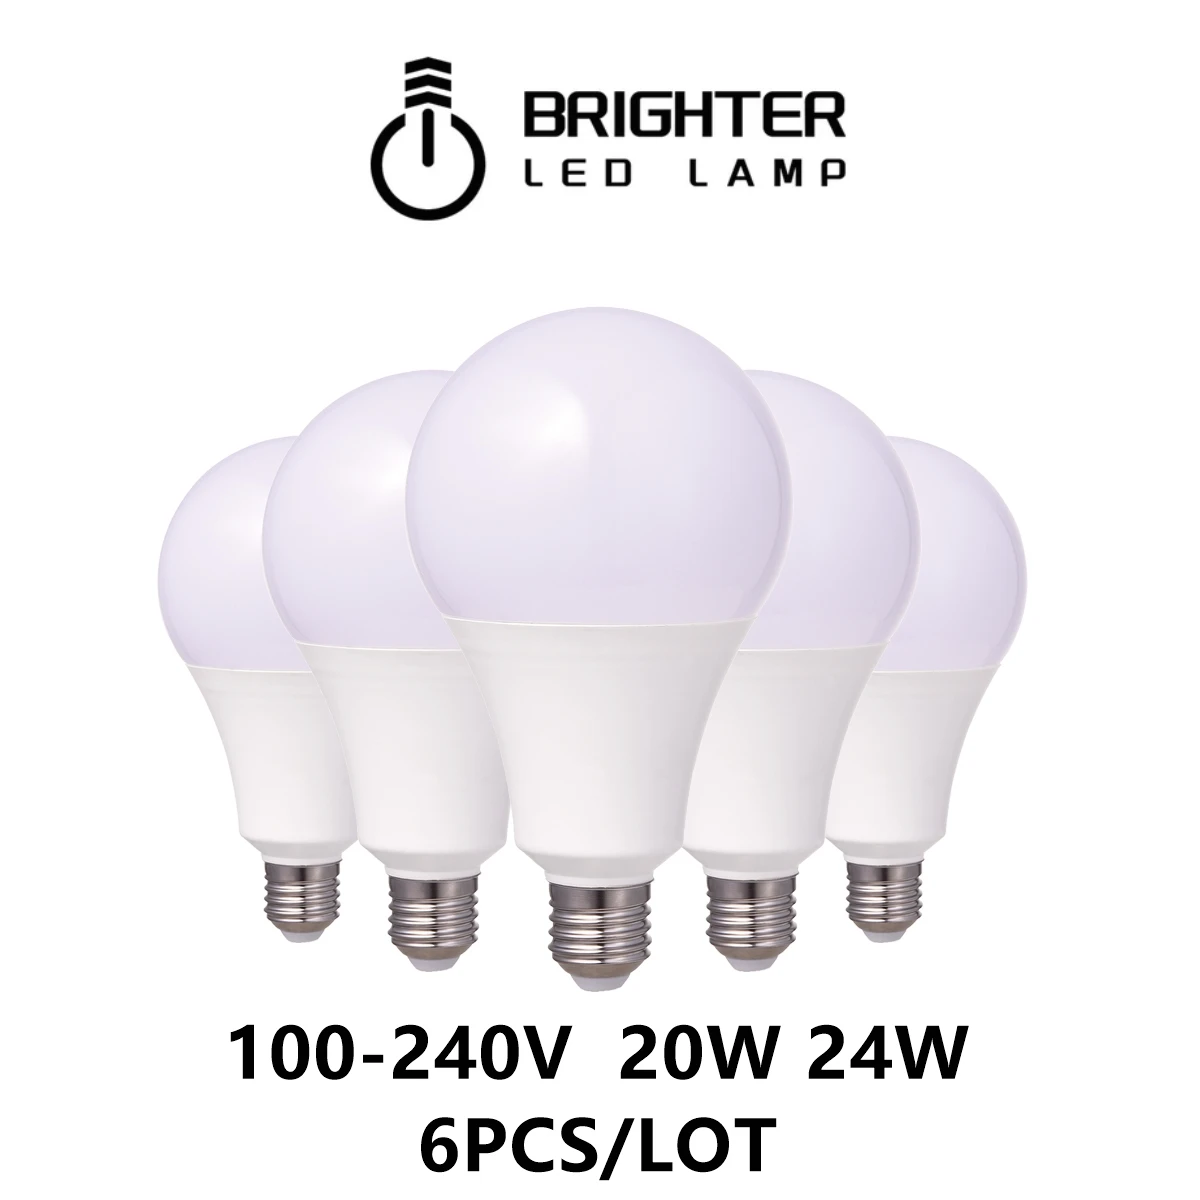 

6PCS/LOT LED high power bulb A80 100V-240V E27 B22 20W 24W 100LM/W for mall home lighting super bright warm white light